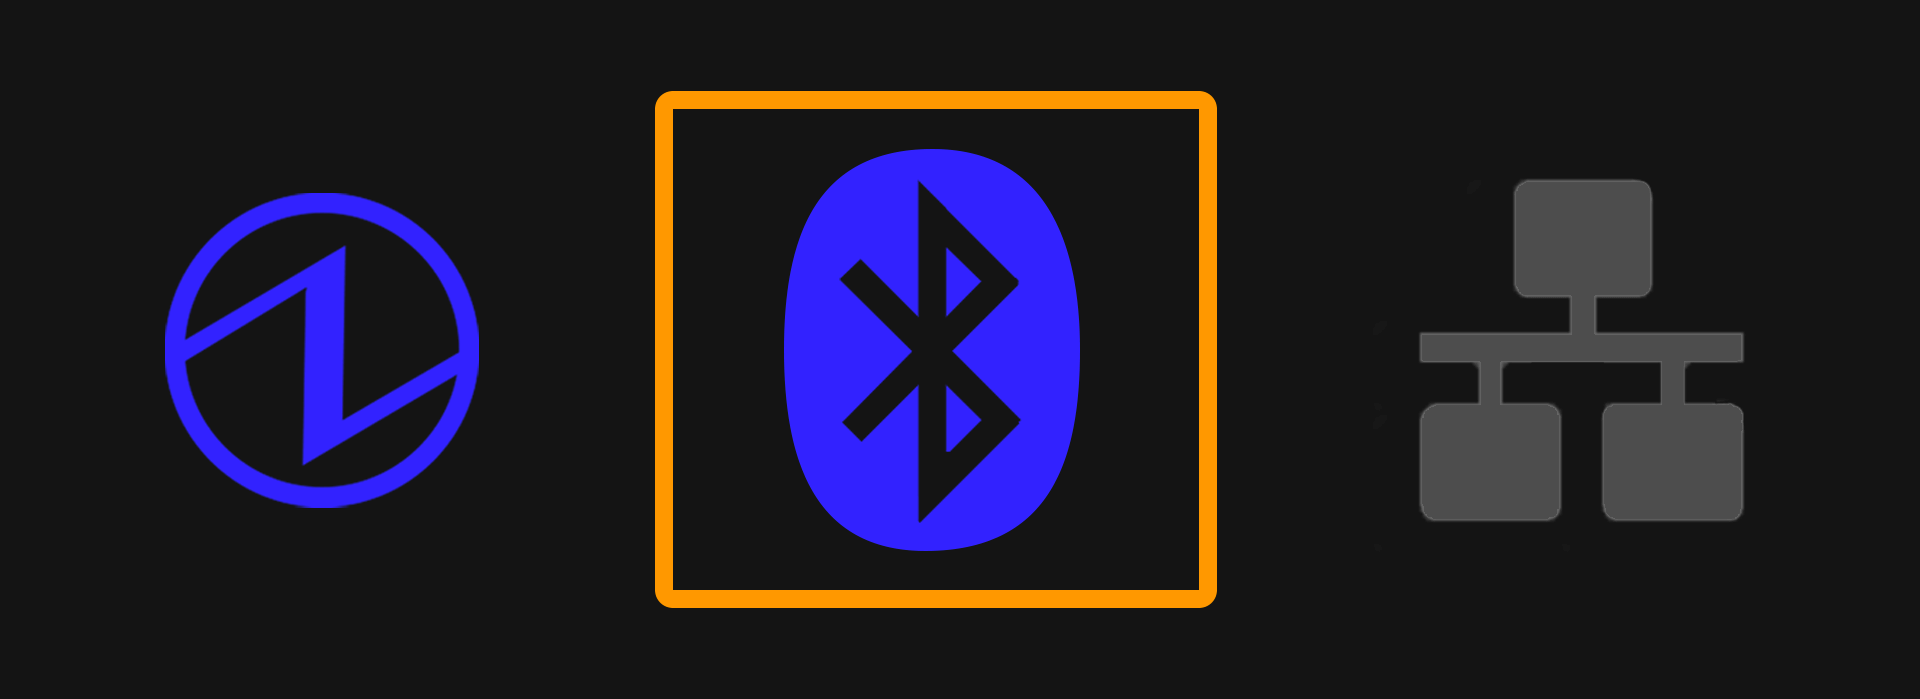 Bluetooth LED